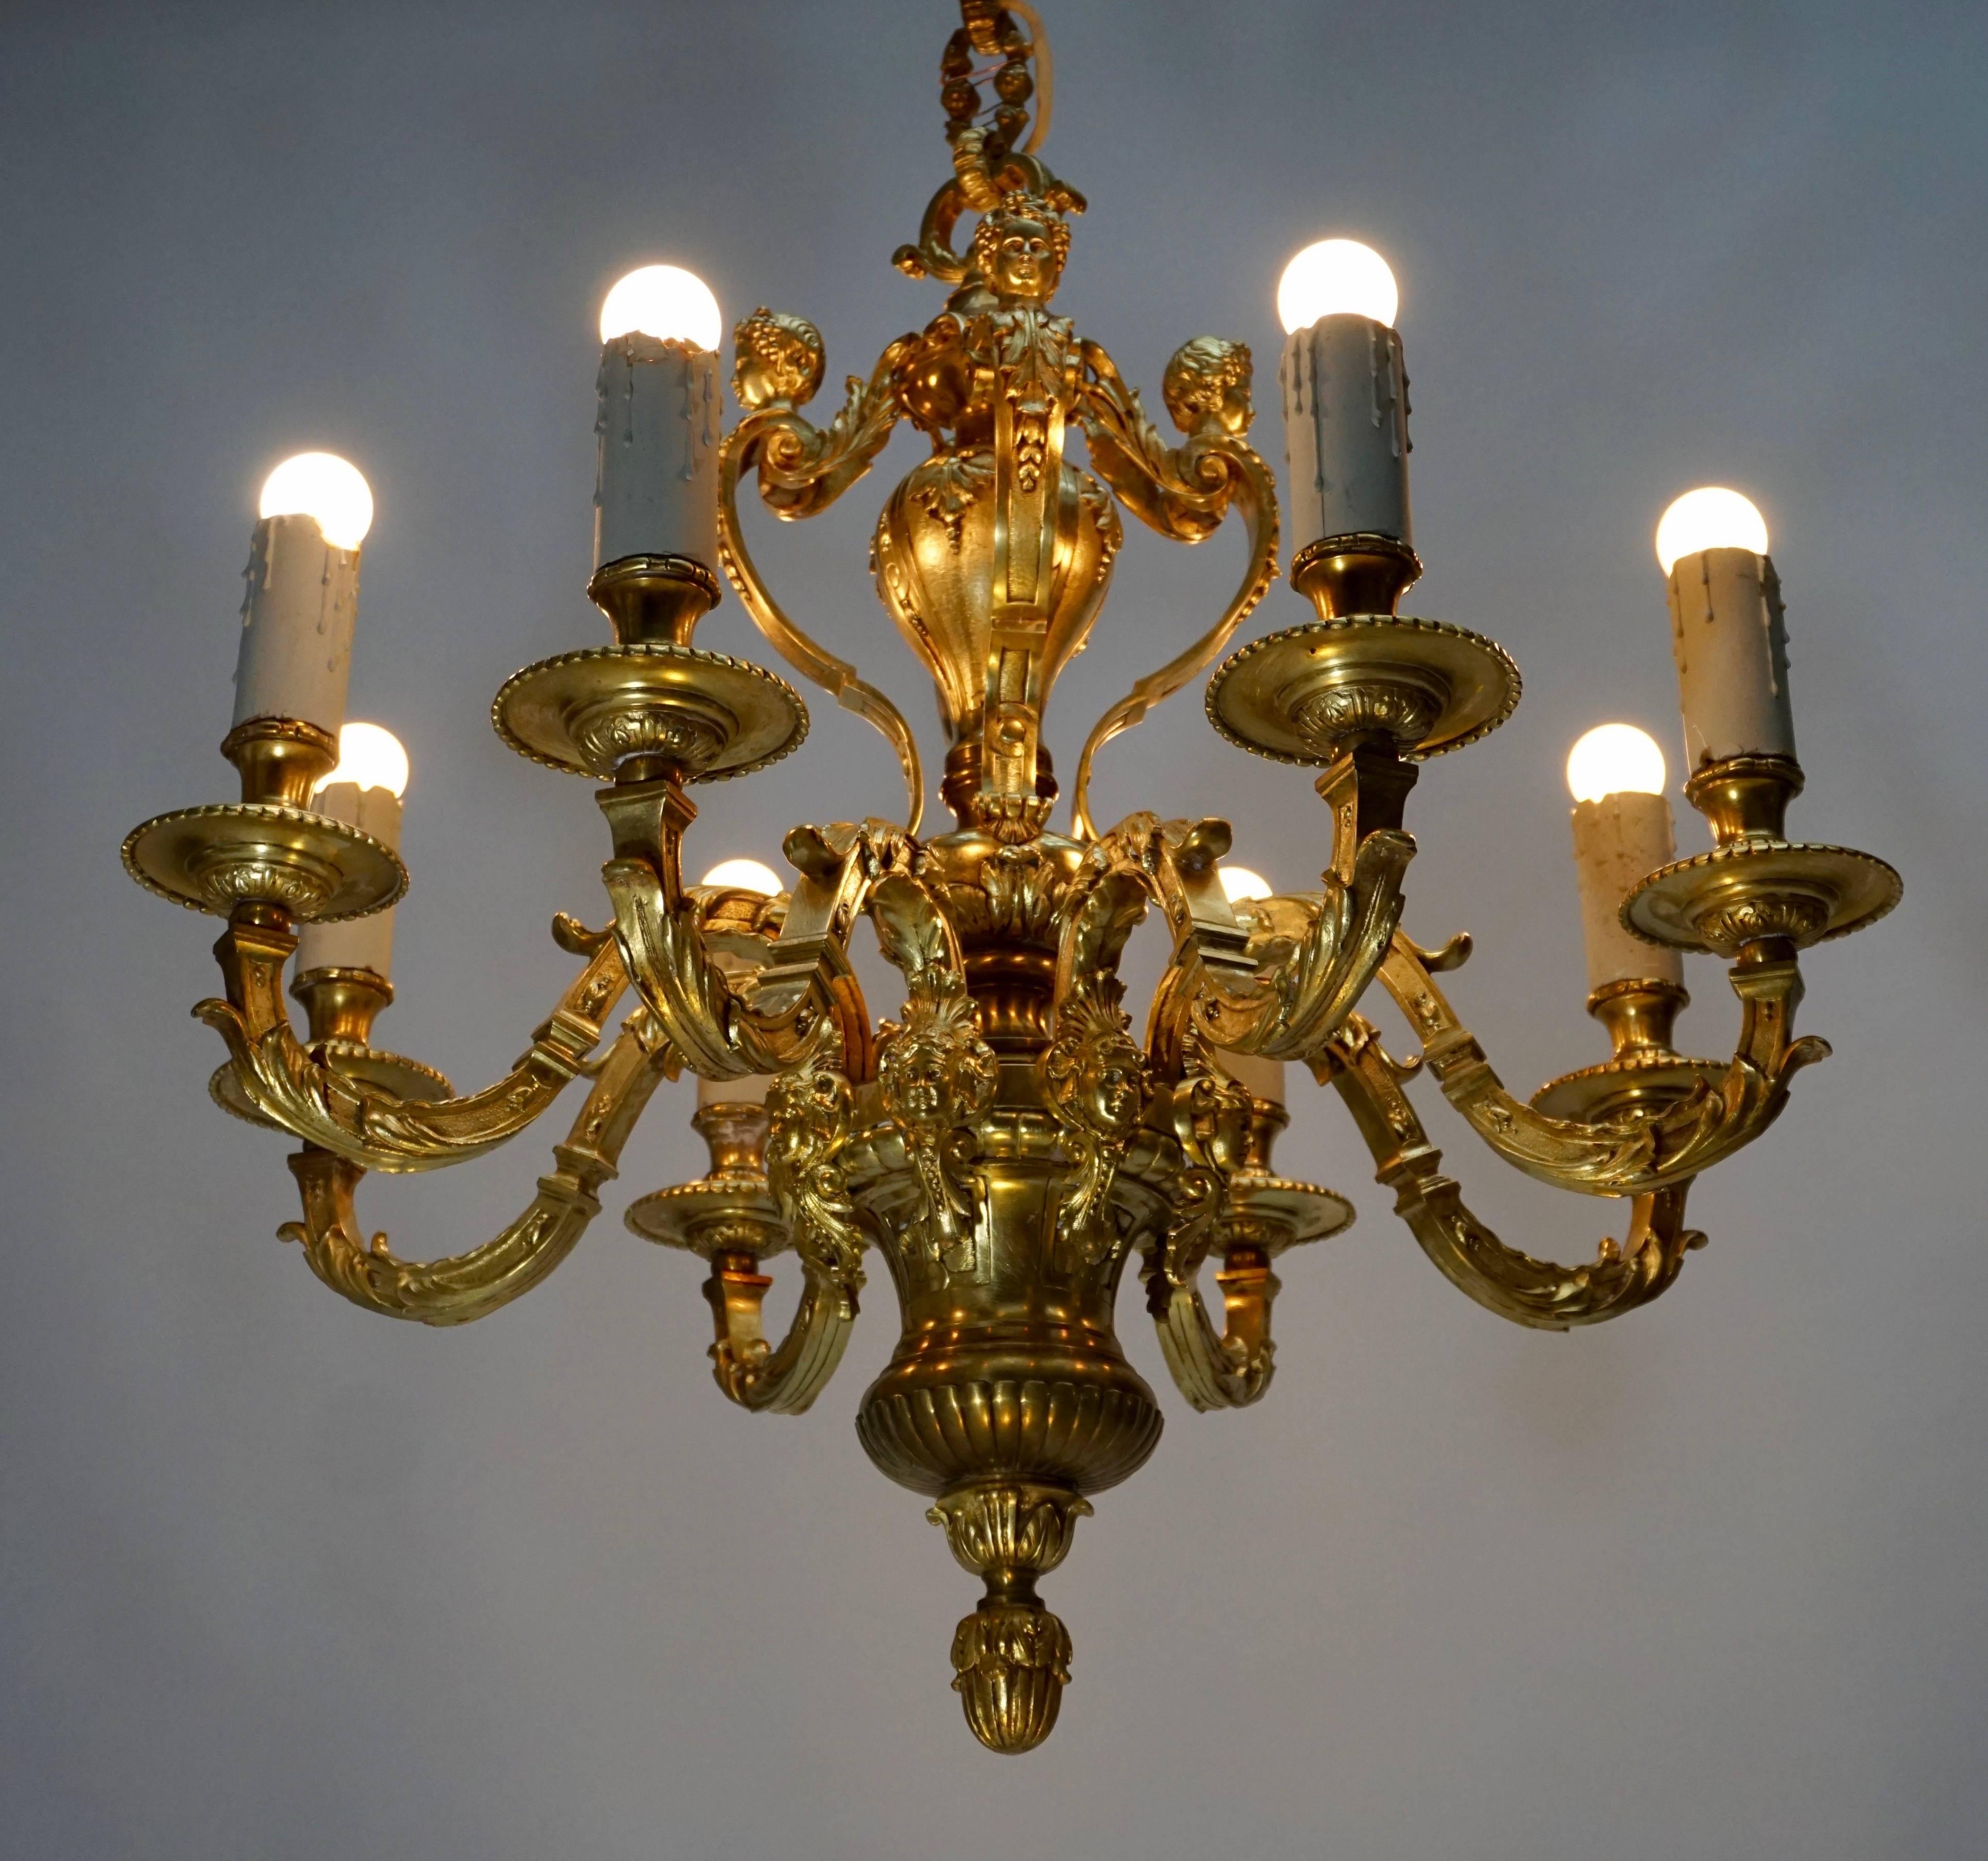 Hollywood Regency French Eight-Light Massive Bronze Mazarin Chandelier with Cherubs For Sale